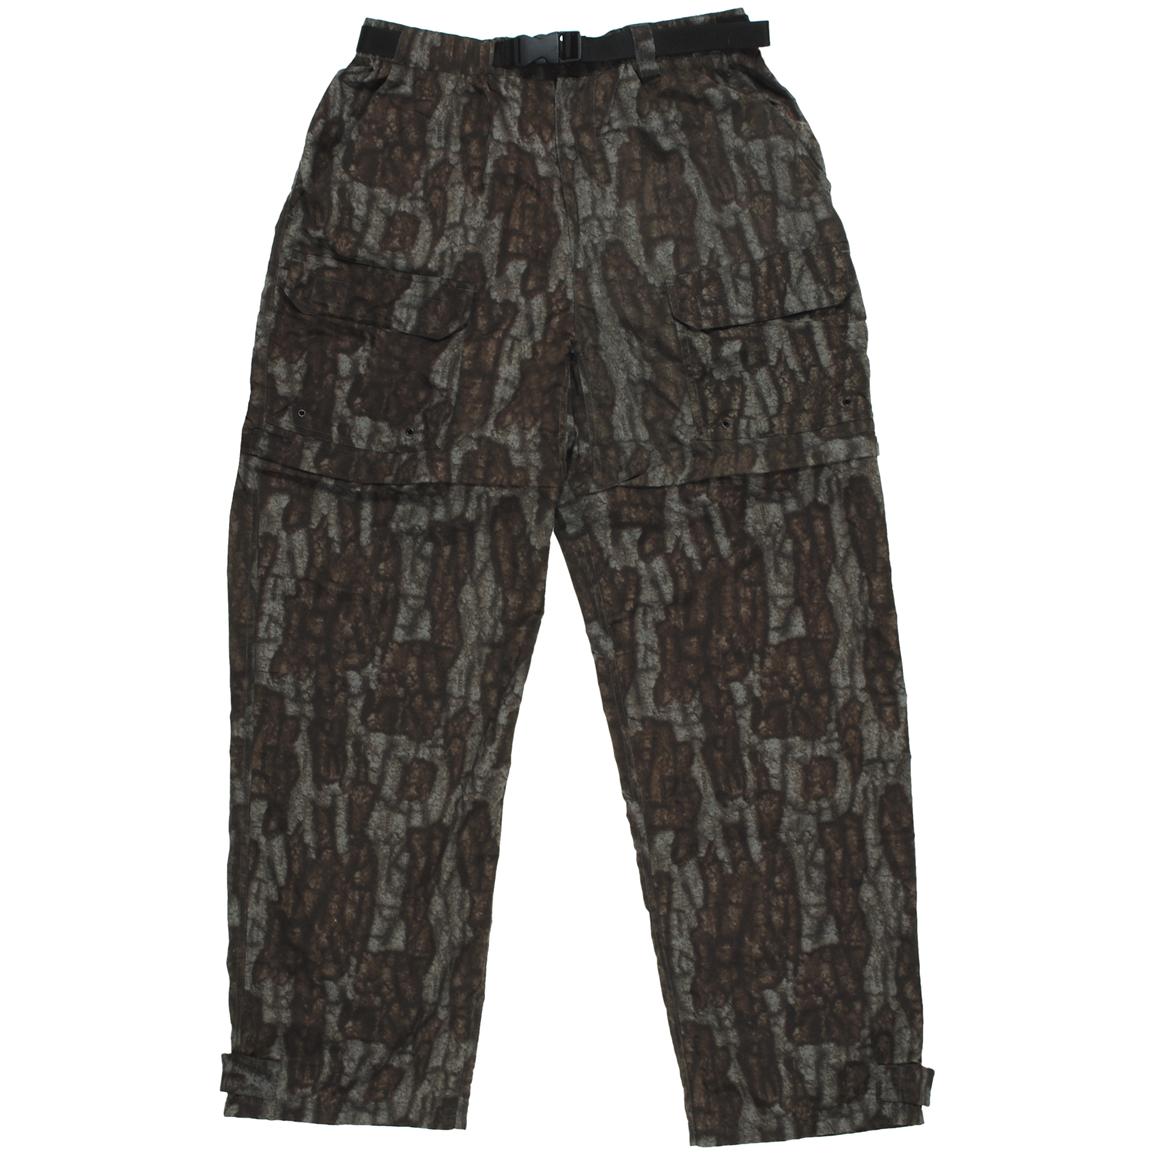 Trebark® Camo Nylon Cargo Pants - 175710, Camo Pants at Sportsman's Guide